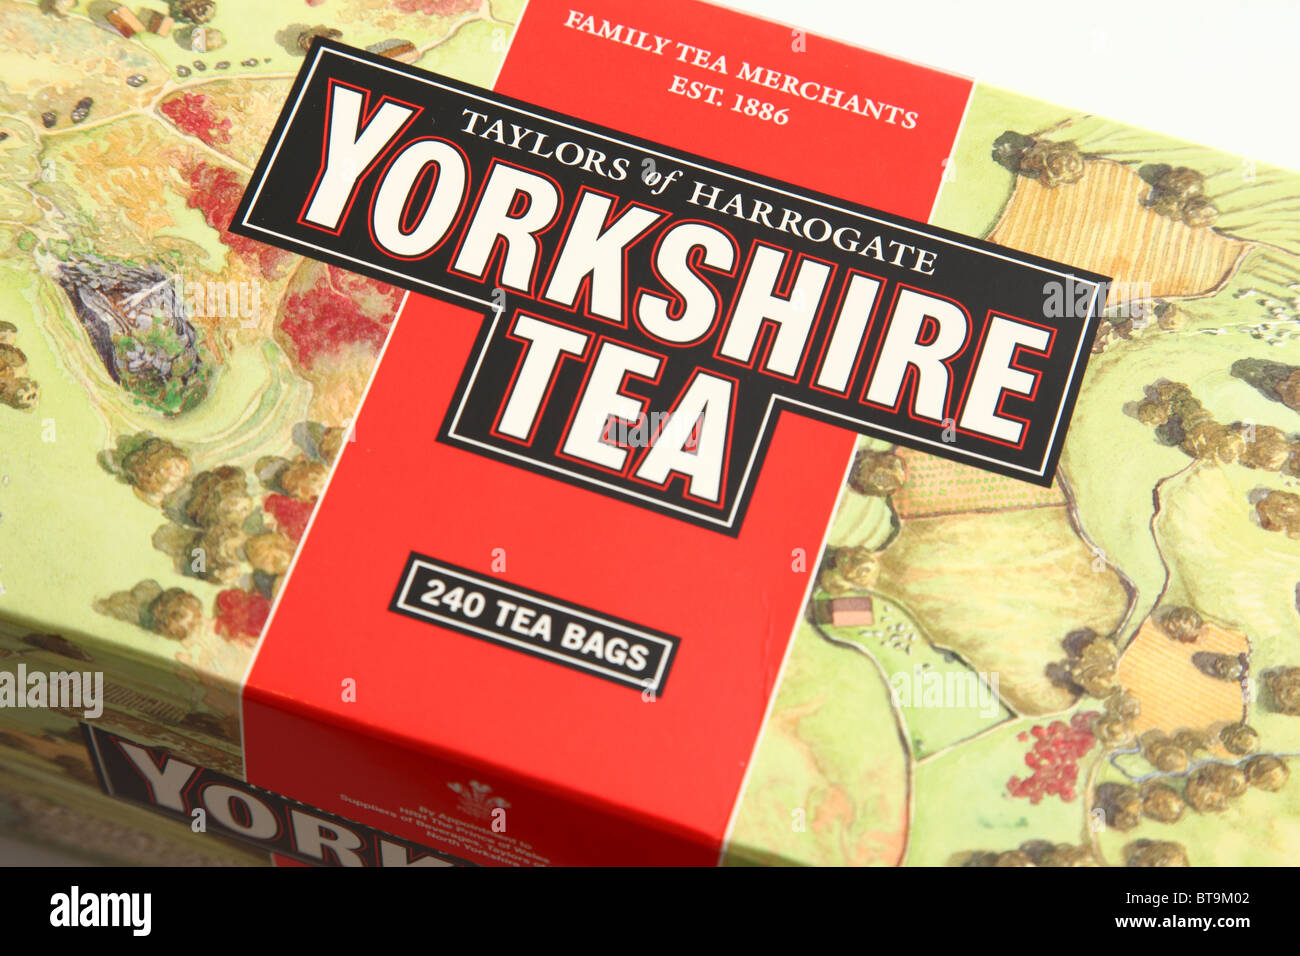 Yorkshire Tea Taylors of Harrogate Yorkshire Red, 240 Teabags